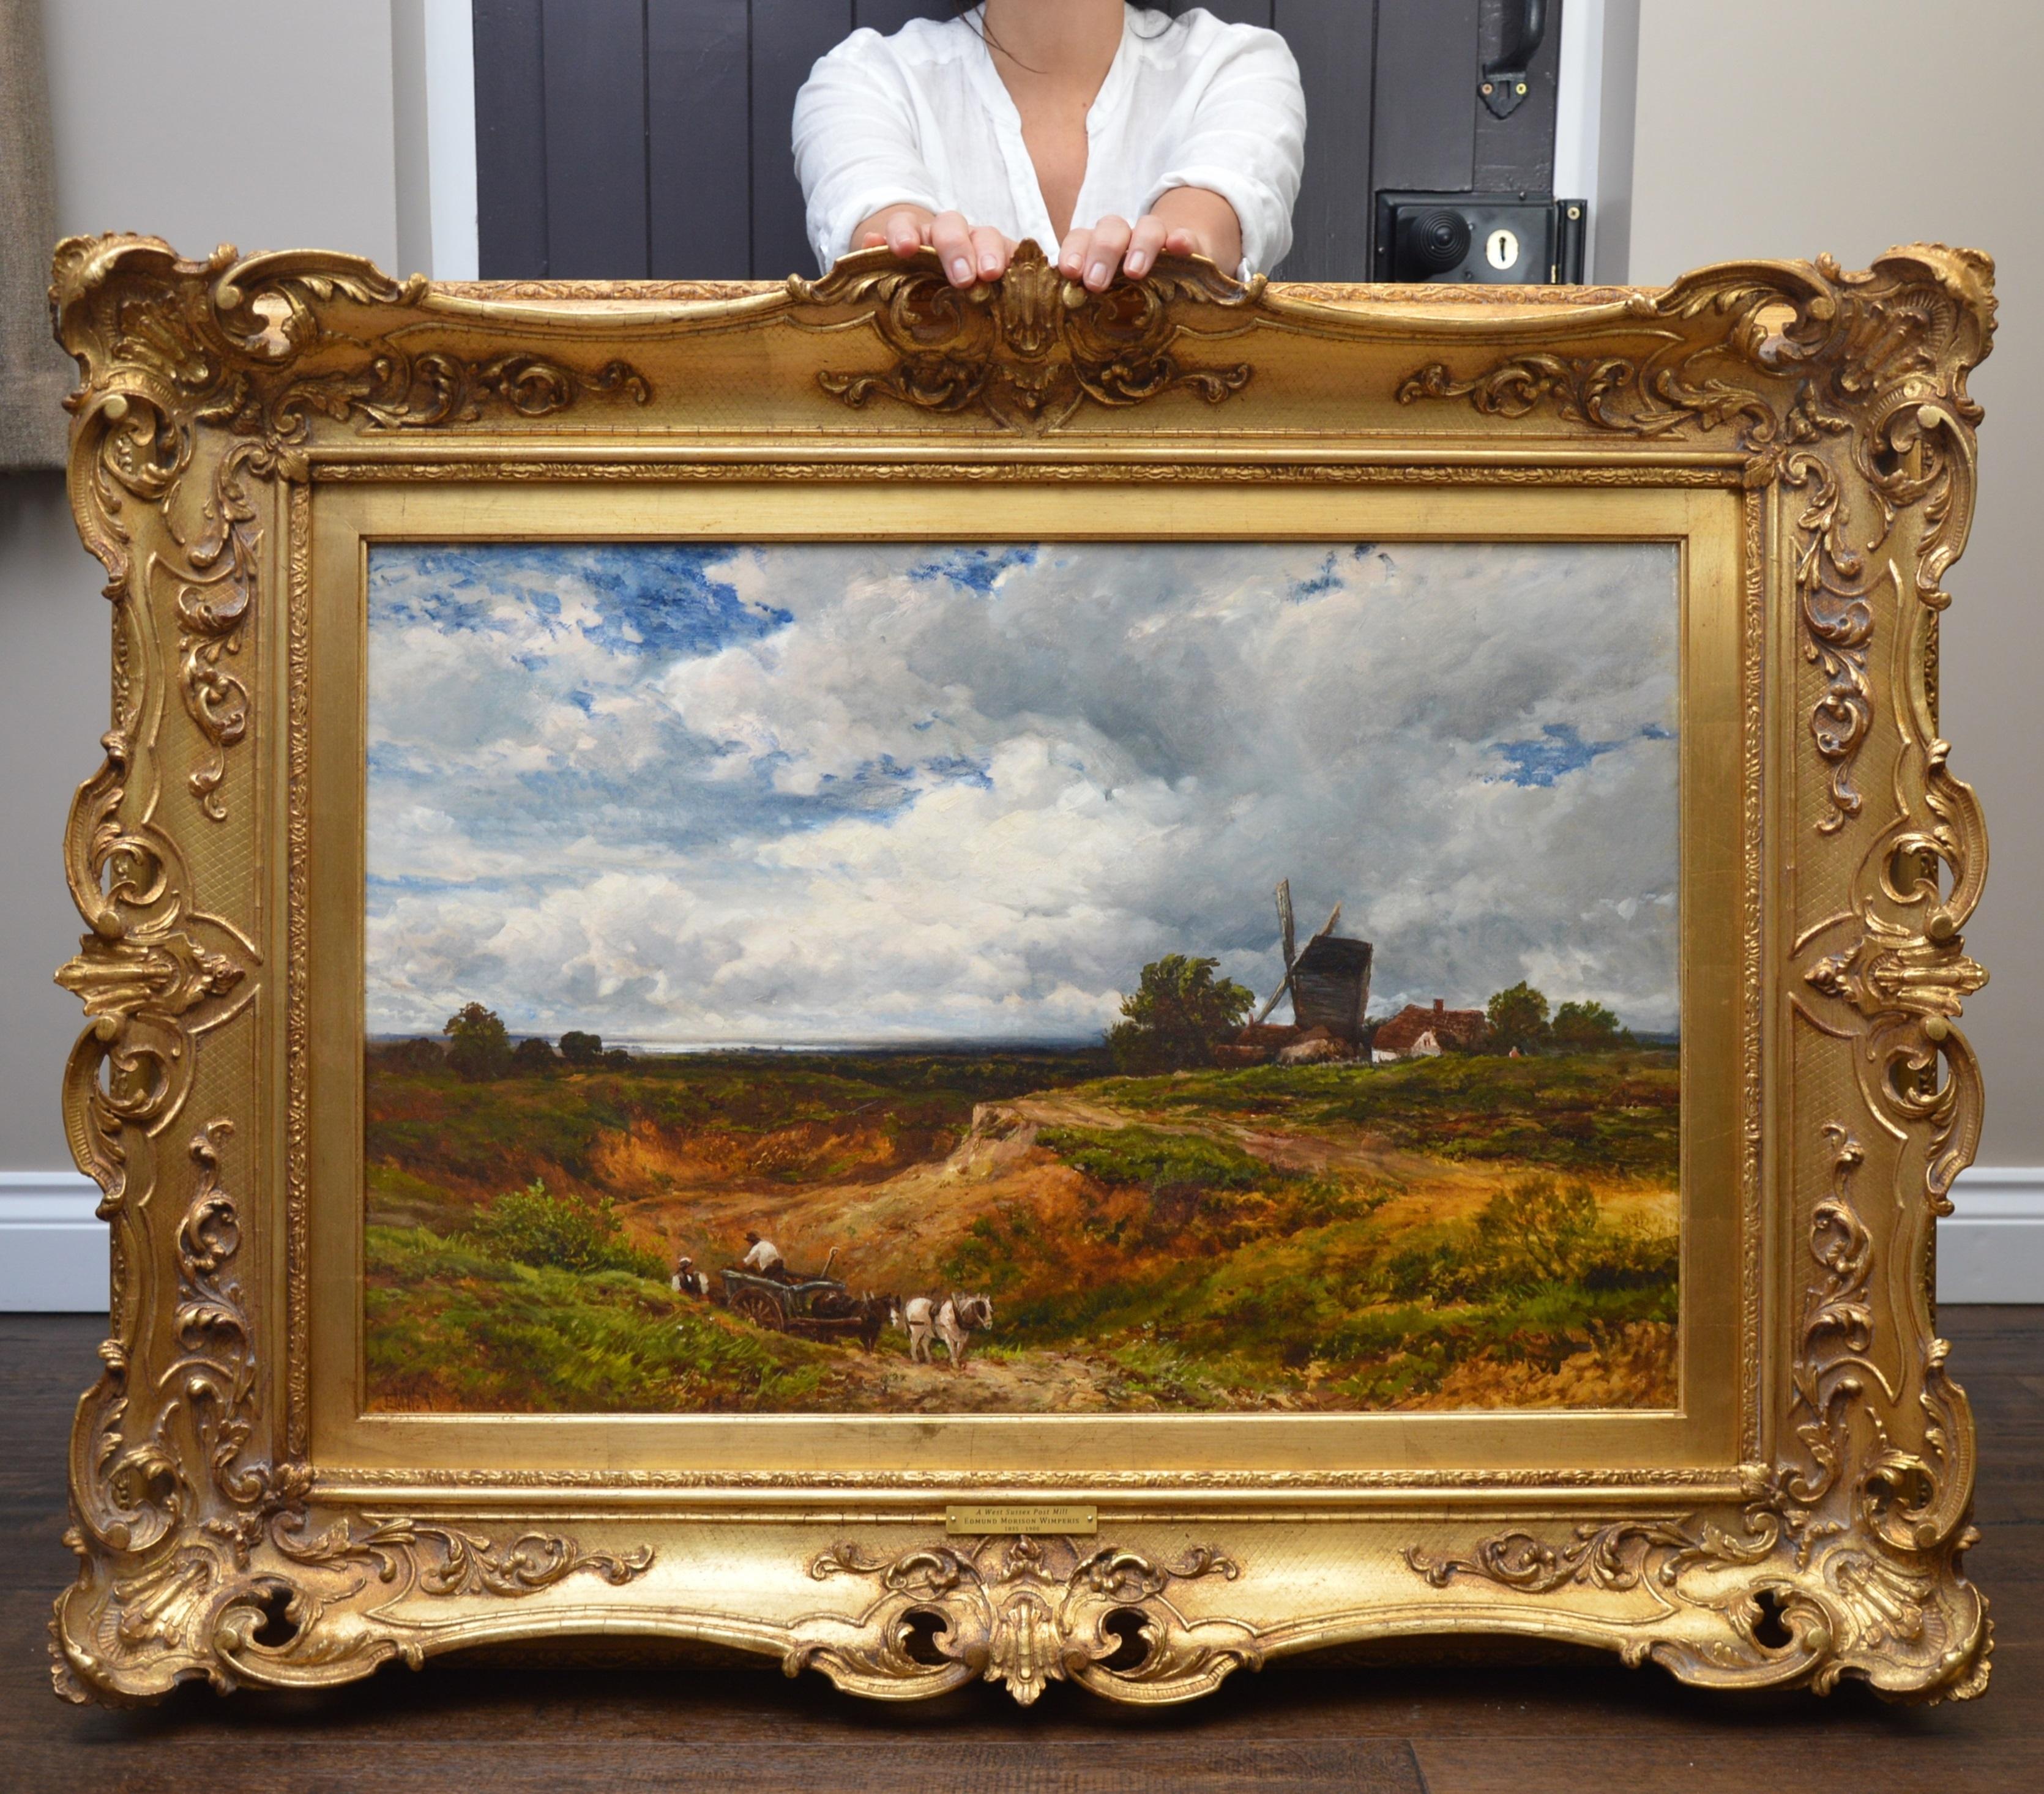 Edmund Wimperis Landscape Painting - A West Sussex Post Mill - Large 19th Century English Landscape Oil Painting